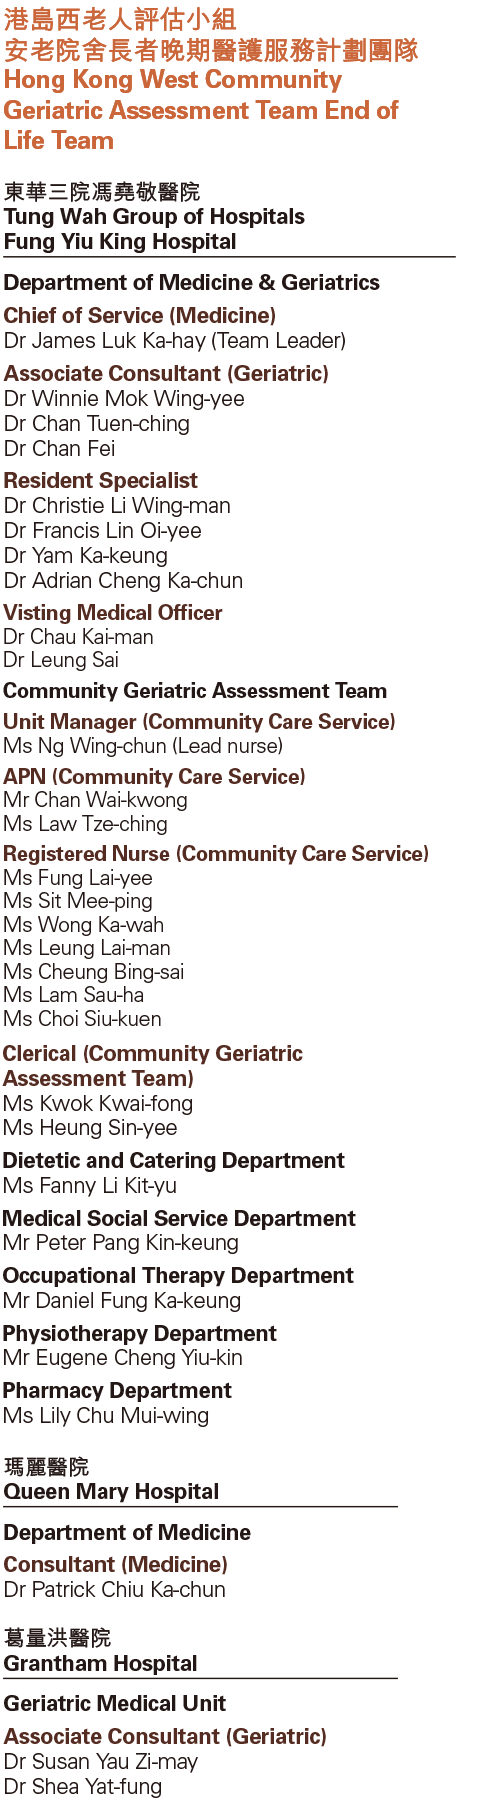 Hong Kong West Community Geriatric Assessment Team End of Life Team